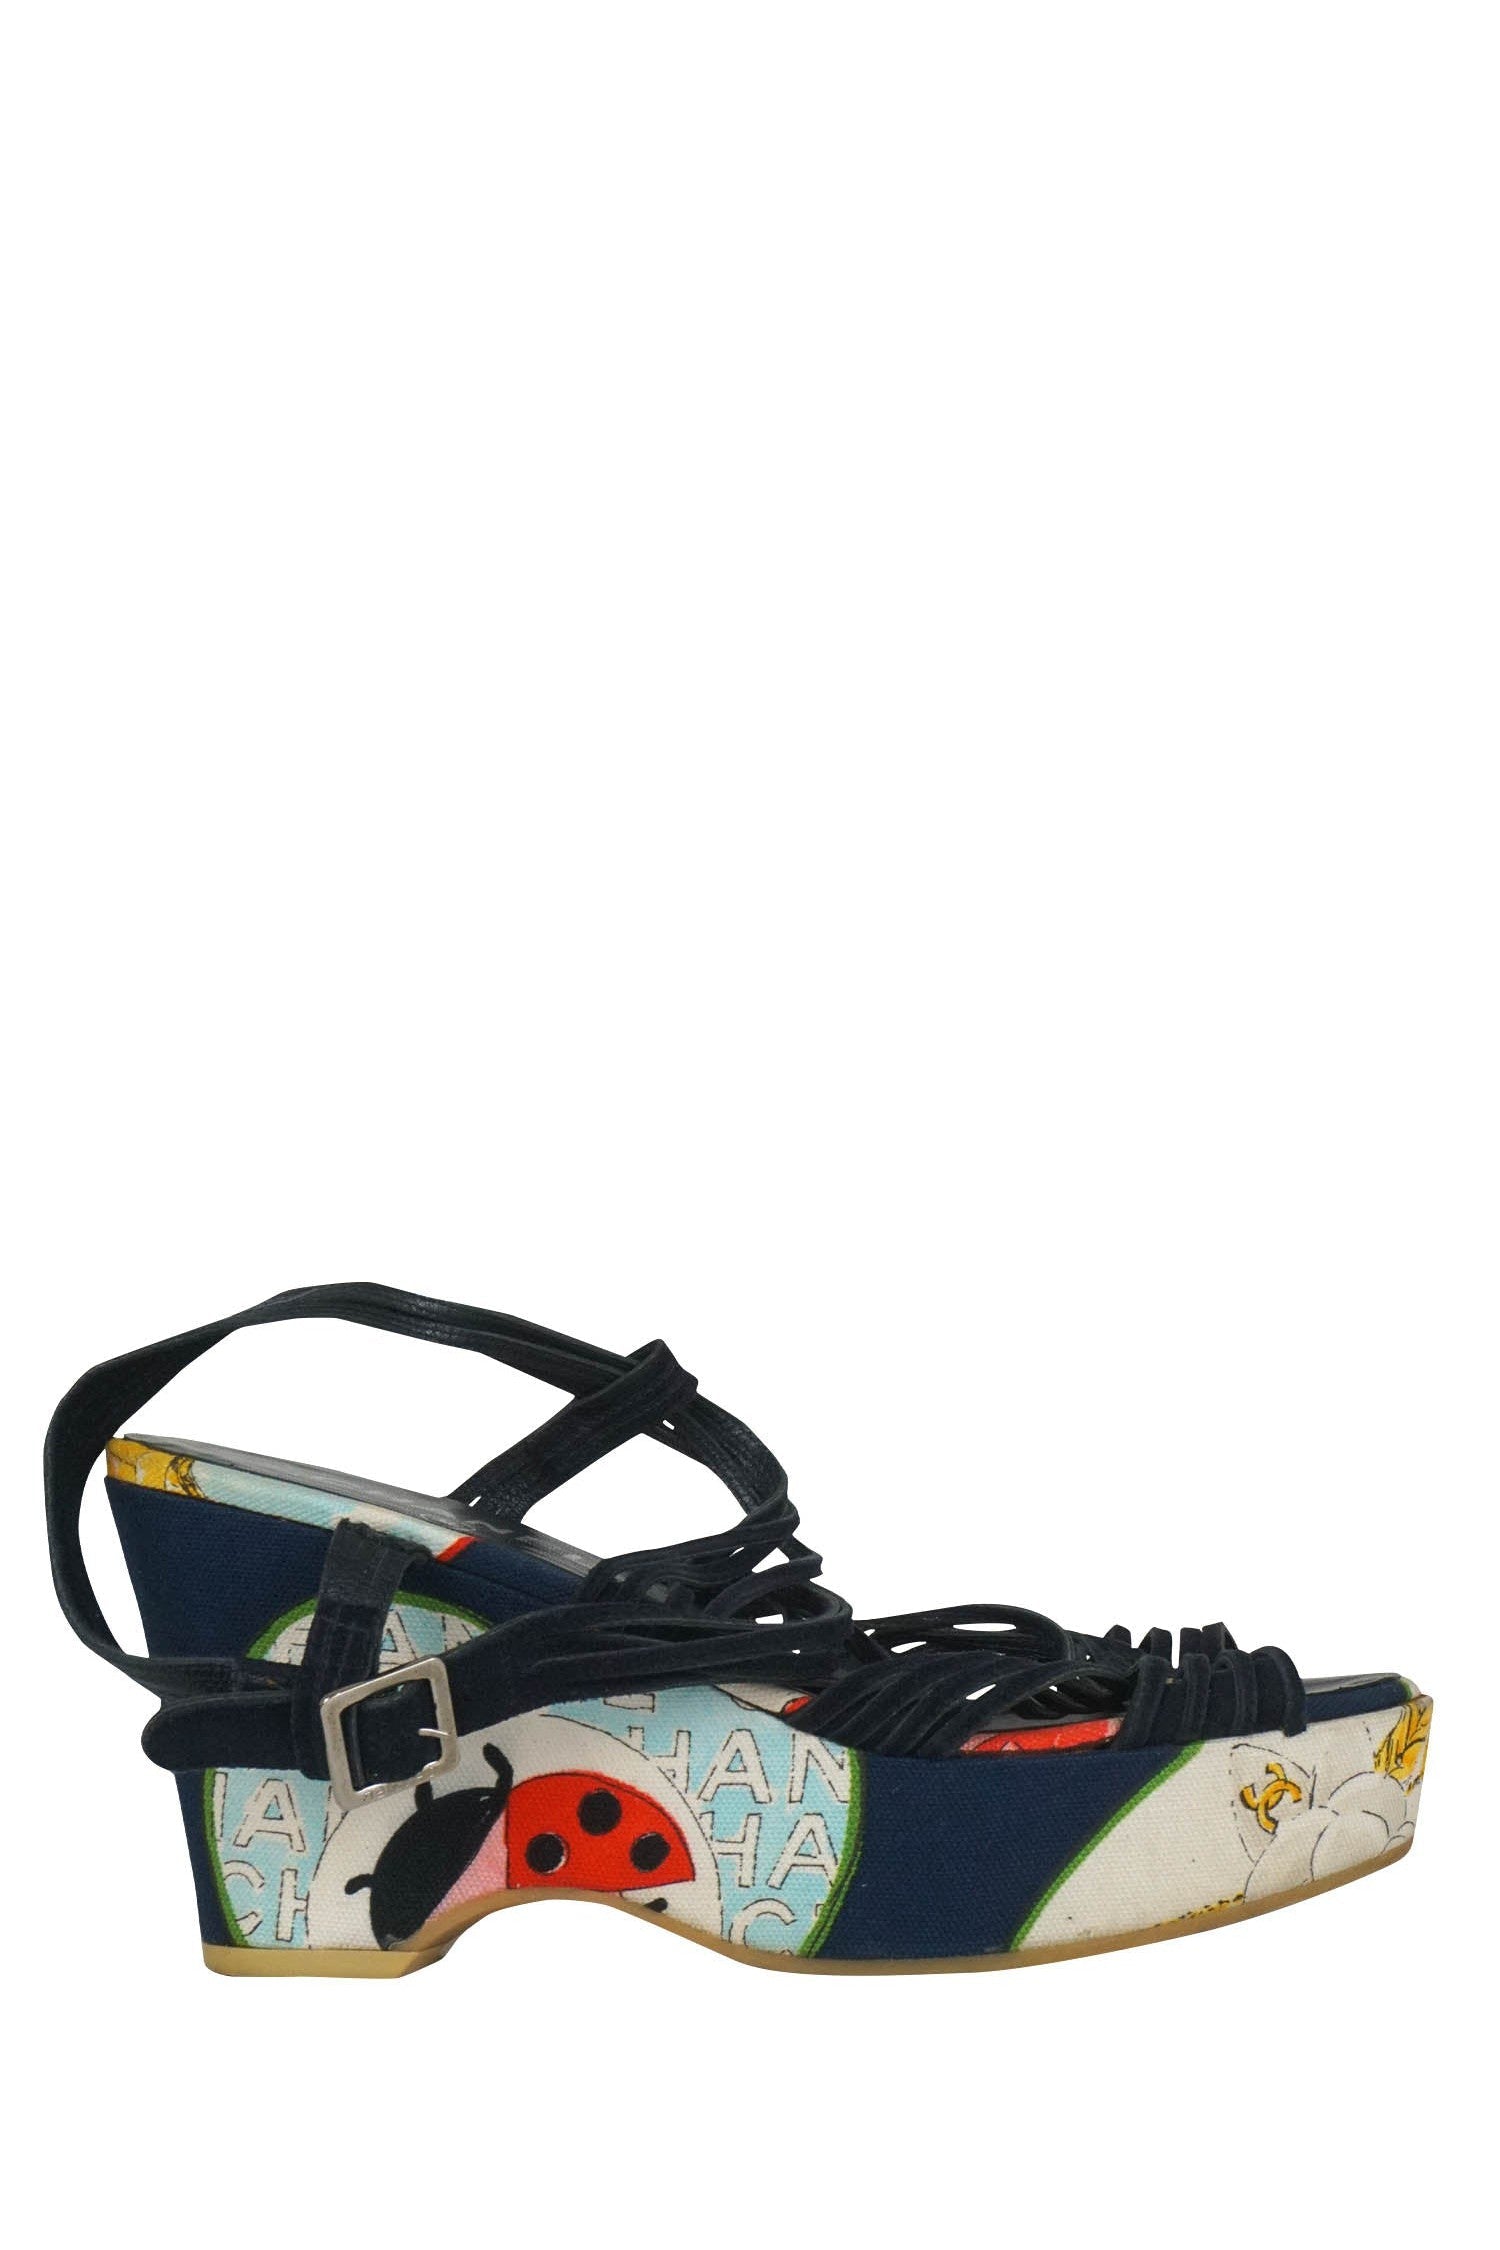 Chanel Vintage Ladybug Canvas Wedge Sandals